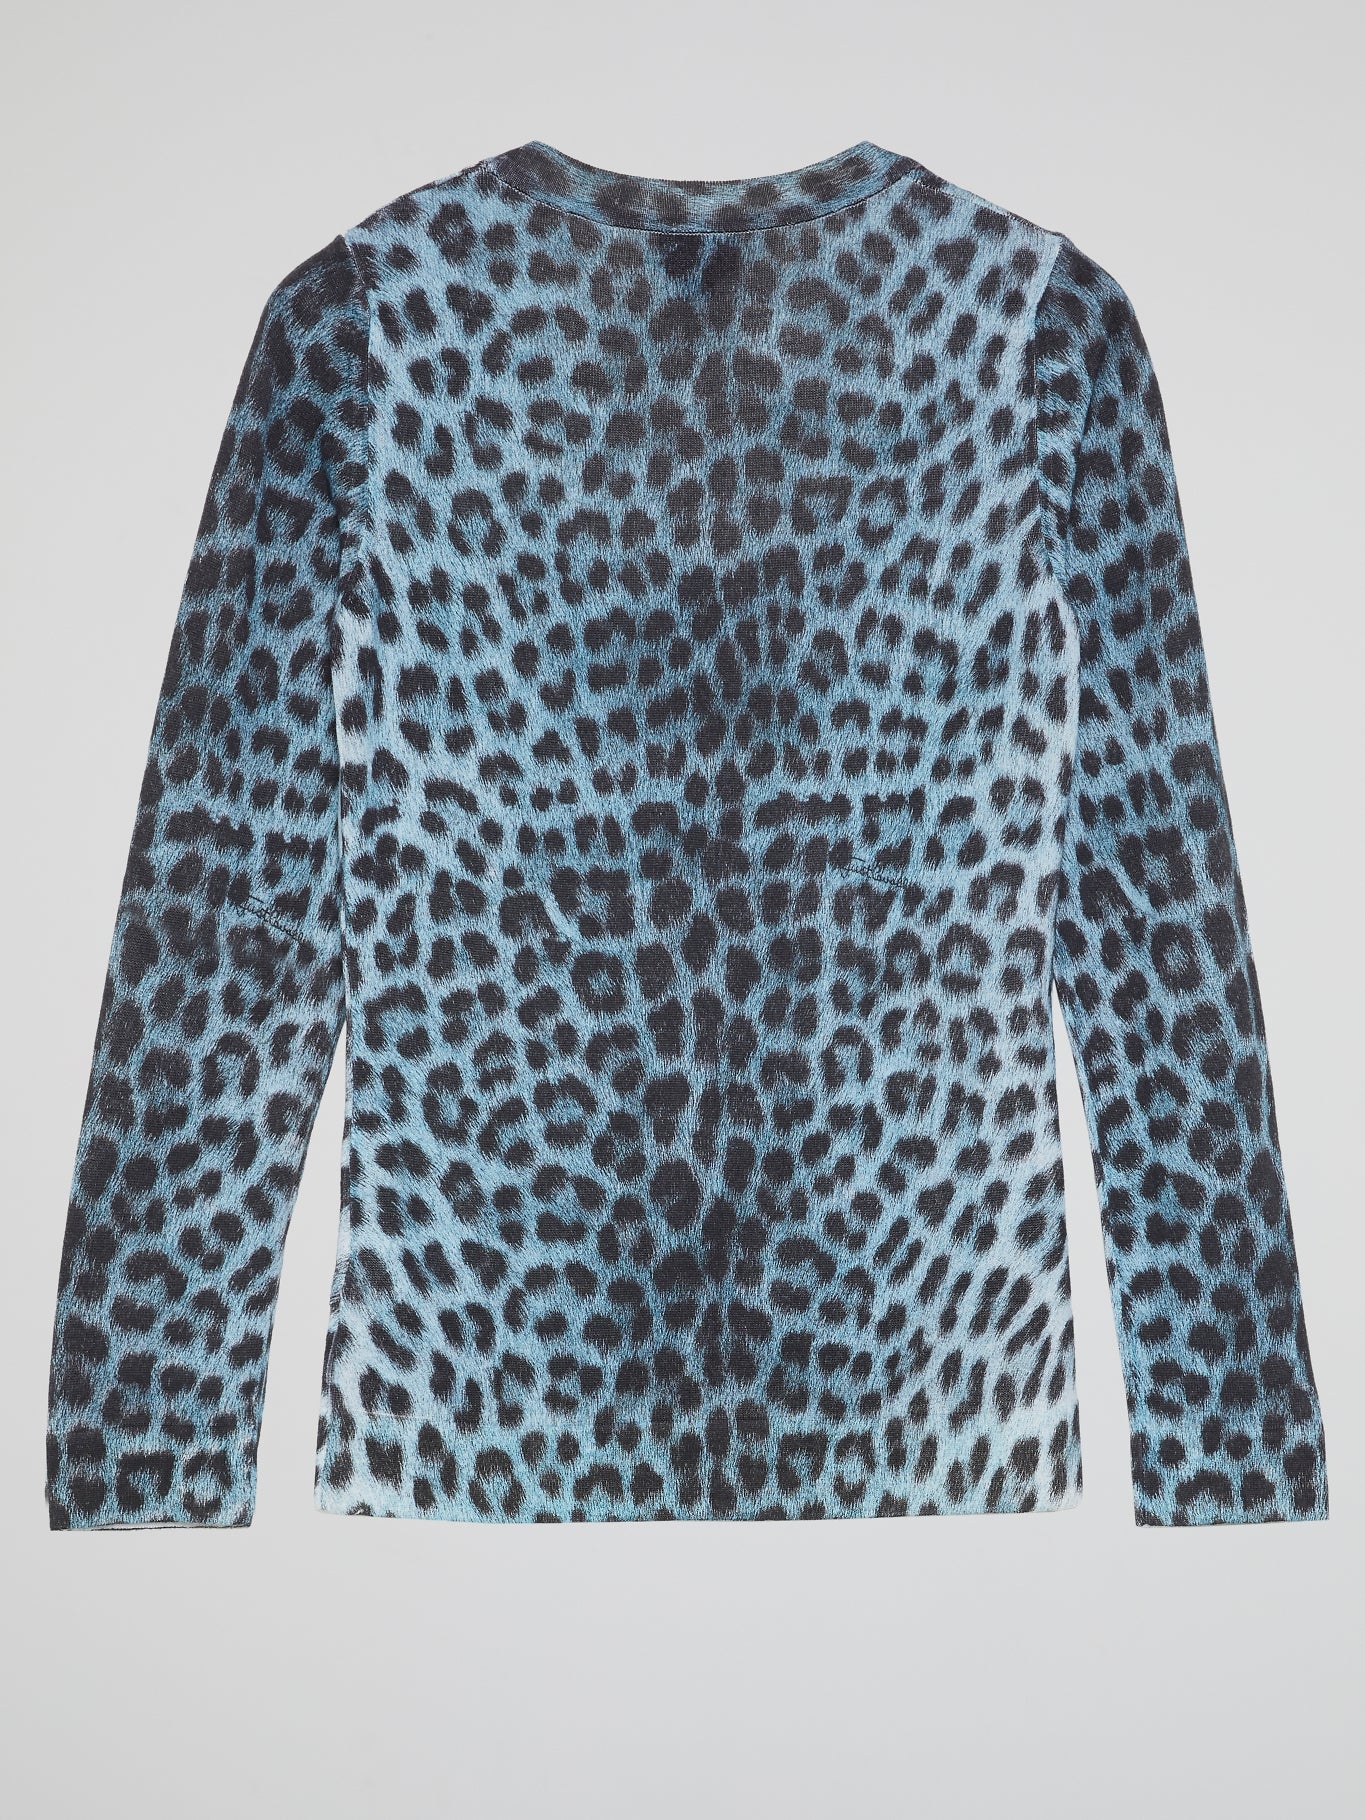 Blue Leopard Print Long Sleeve Top